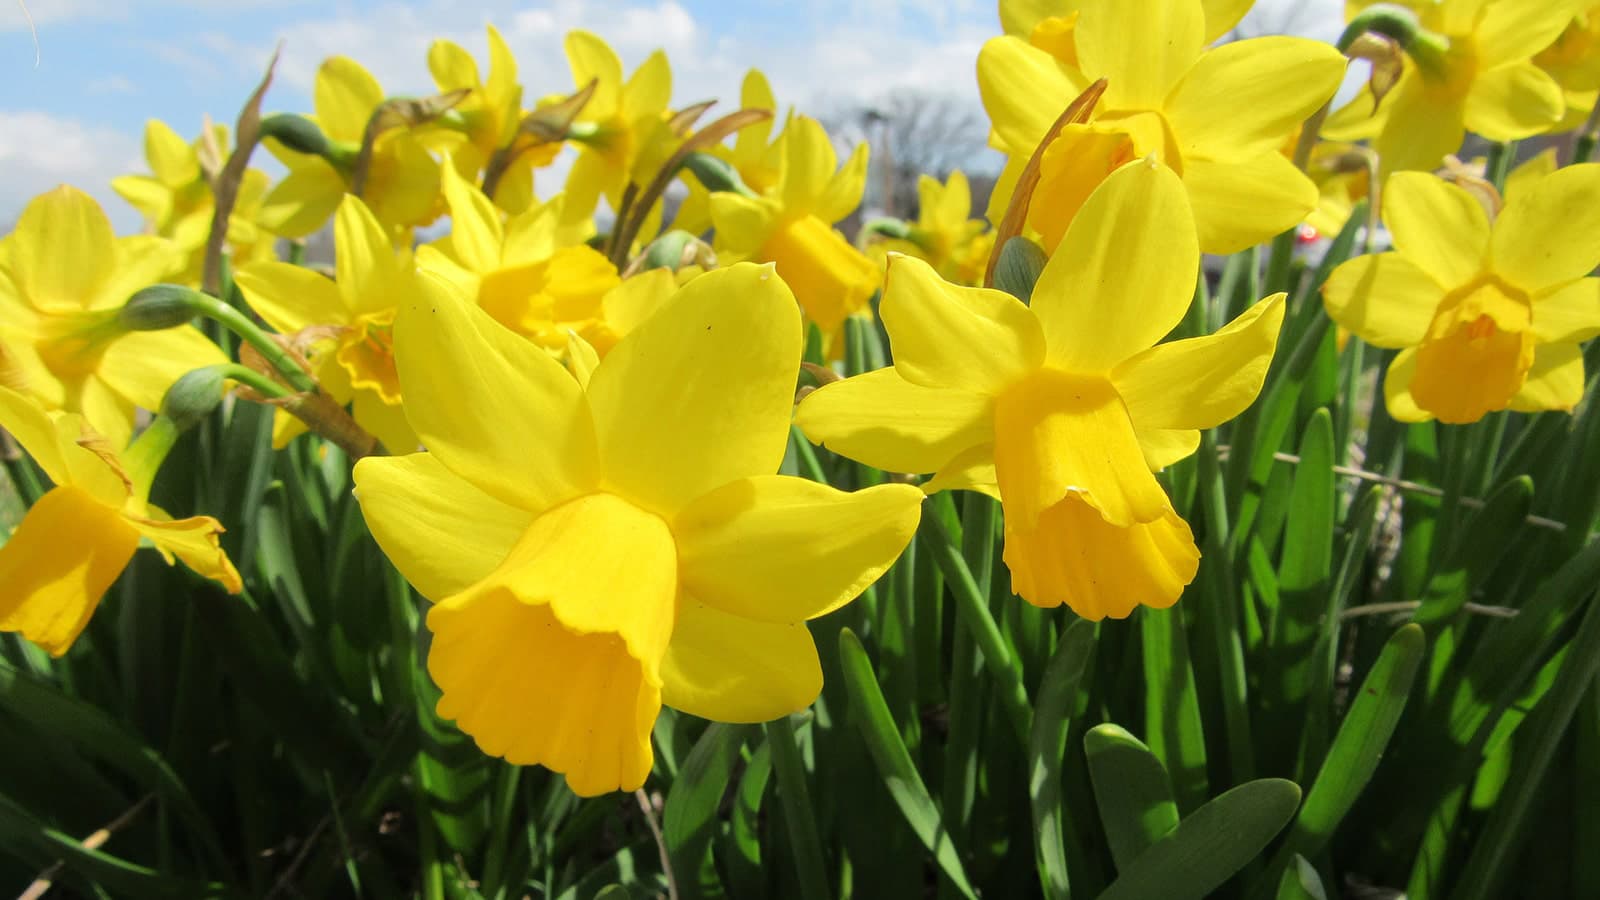 Close up image of daffodills